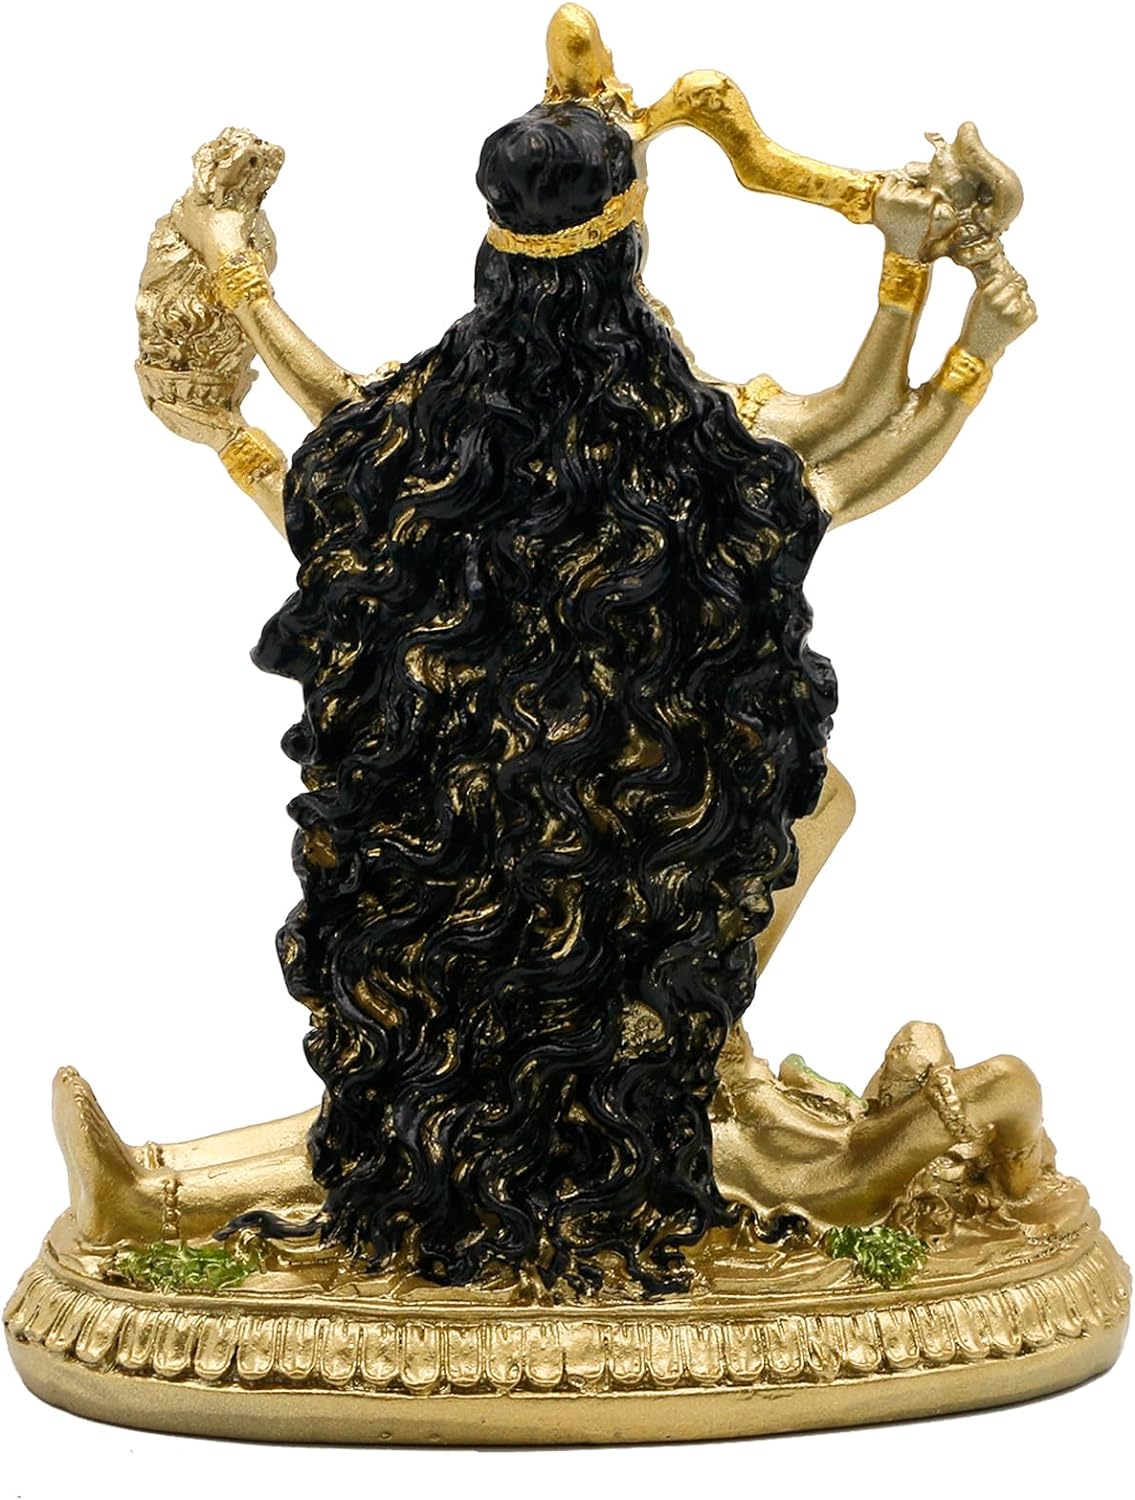 Antique Gold Hindu God Kali Statue – Indian Idol Murti Pooja Item Kali Maa Figurine Home Temple Mandir Decor Religion Puja Decoration Item